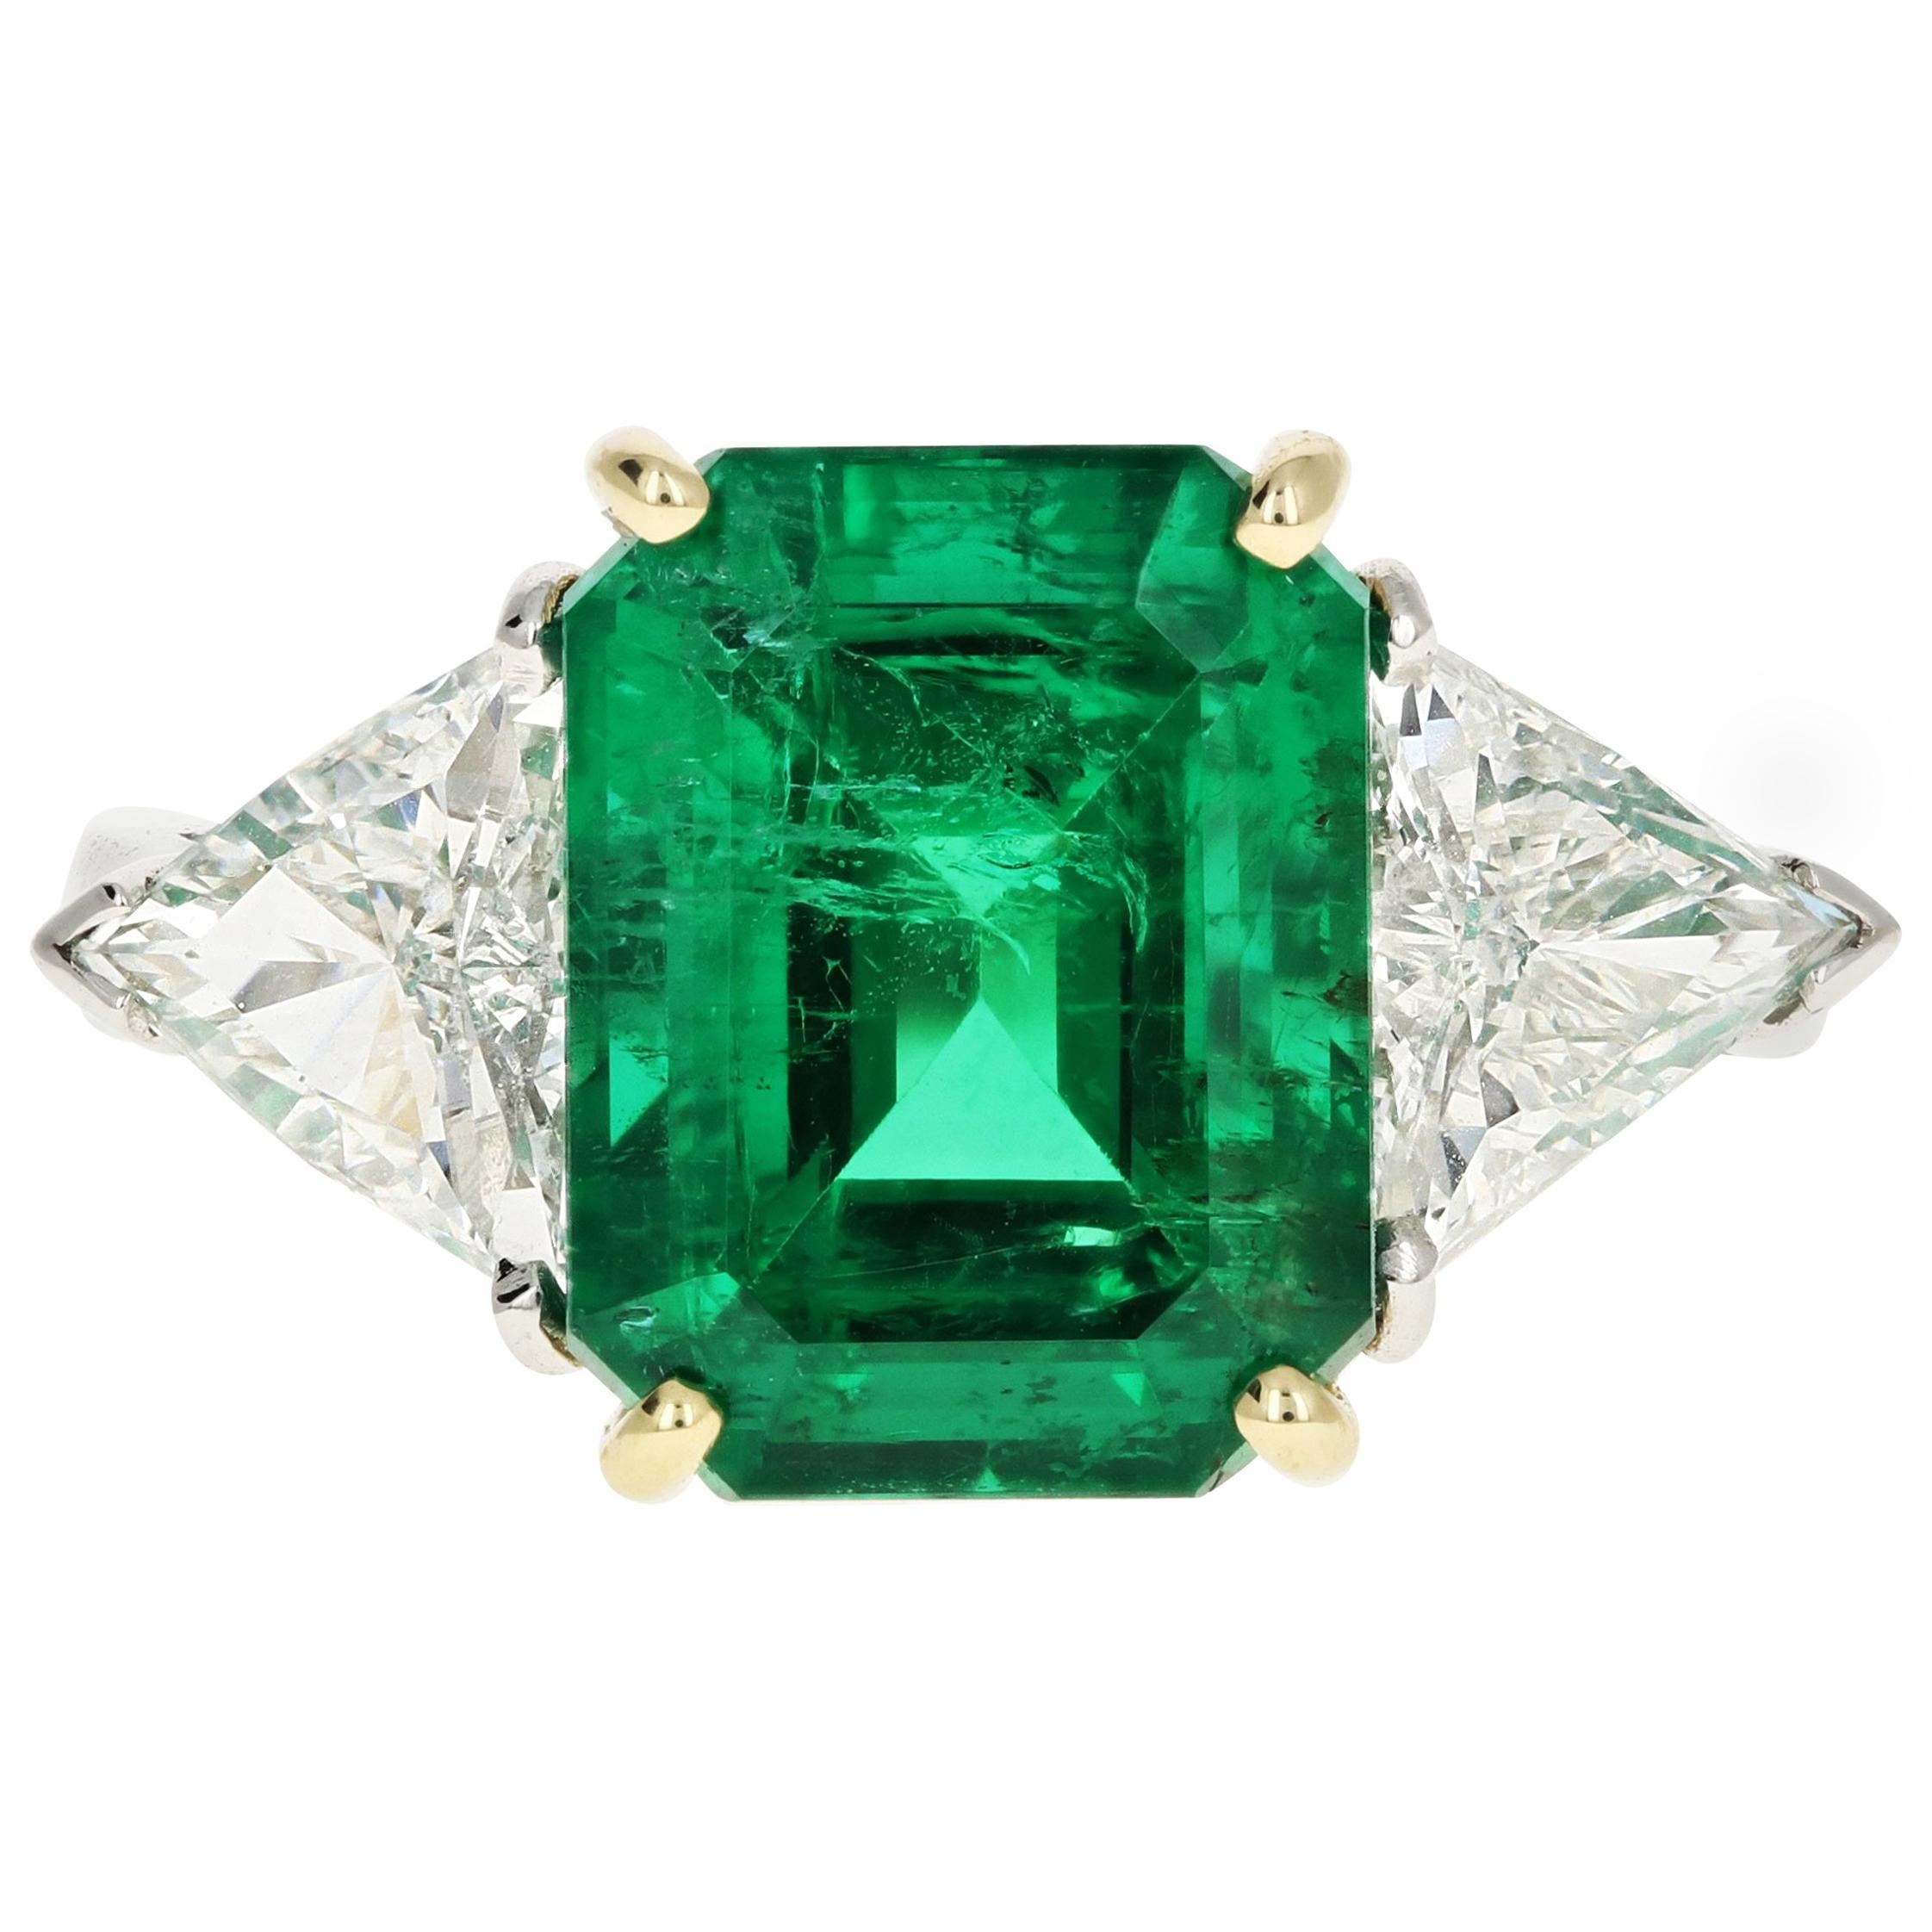 Platinum Natural Zambian Emerald Ring with Trillion Cut Diamonds